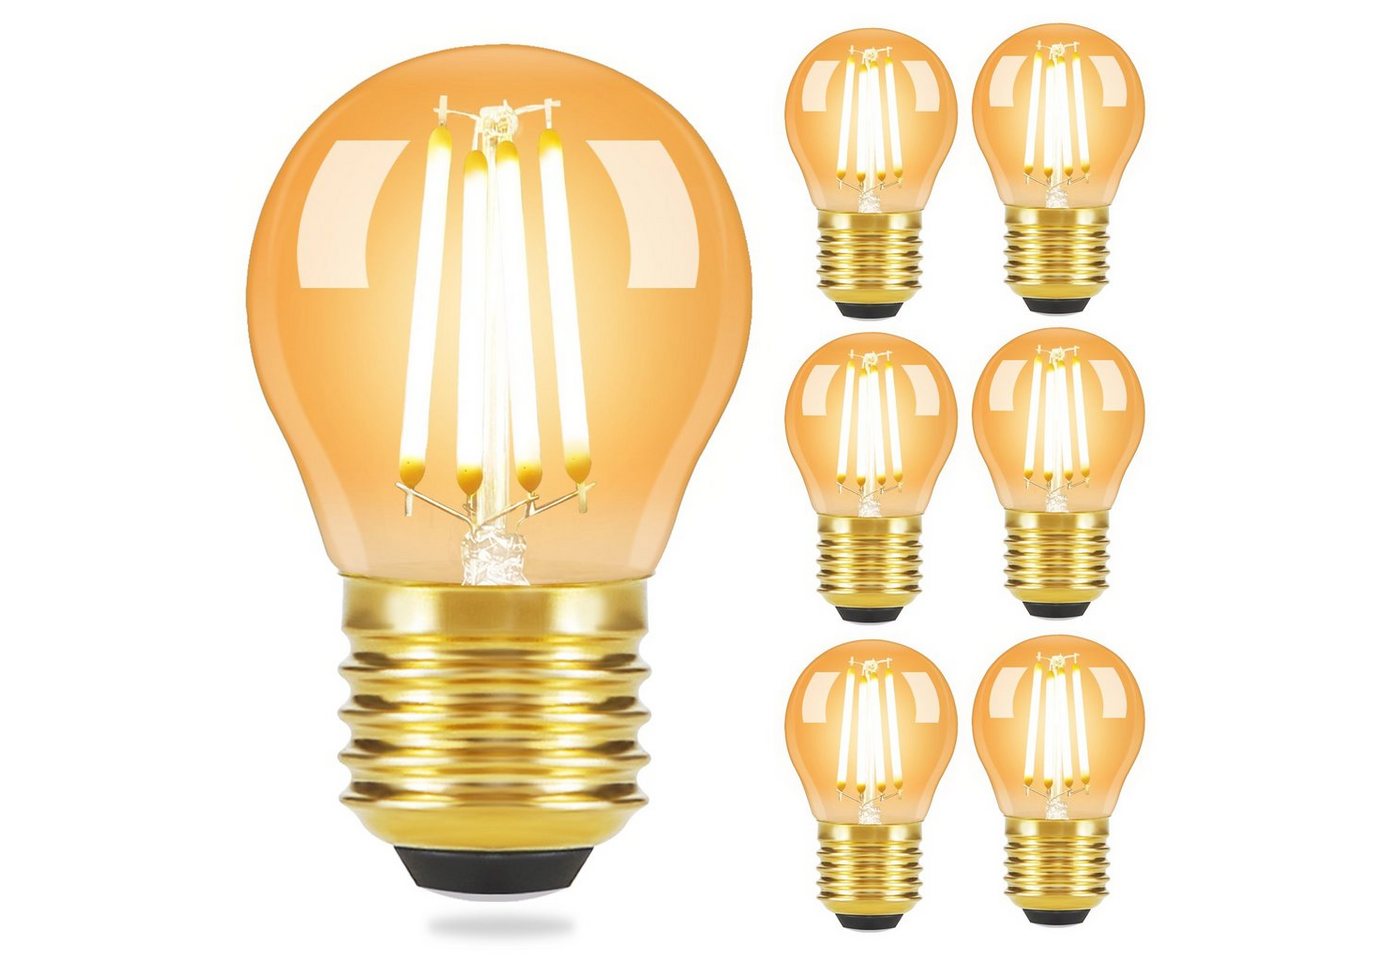 ZMH LED-Leuchtmittel Edison LED Vintage Glühbirne - G45 2700K E14//E27, E27, 6 St., warmweiß, Filament Retro Glas Birne Energiesparlampe von ZMH